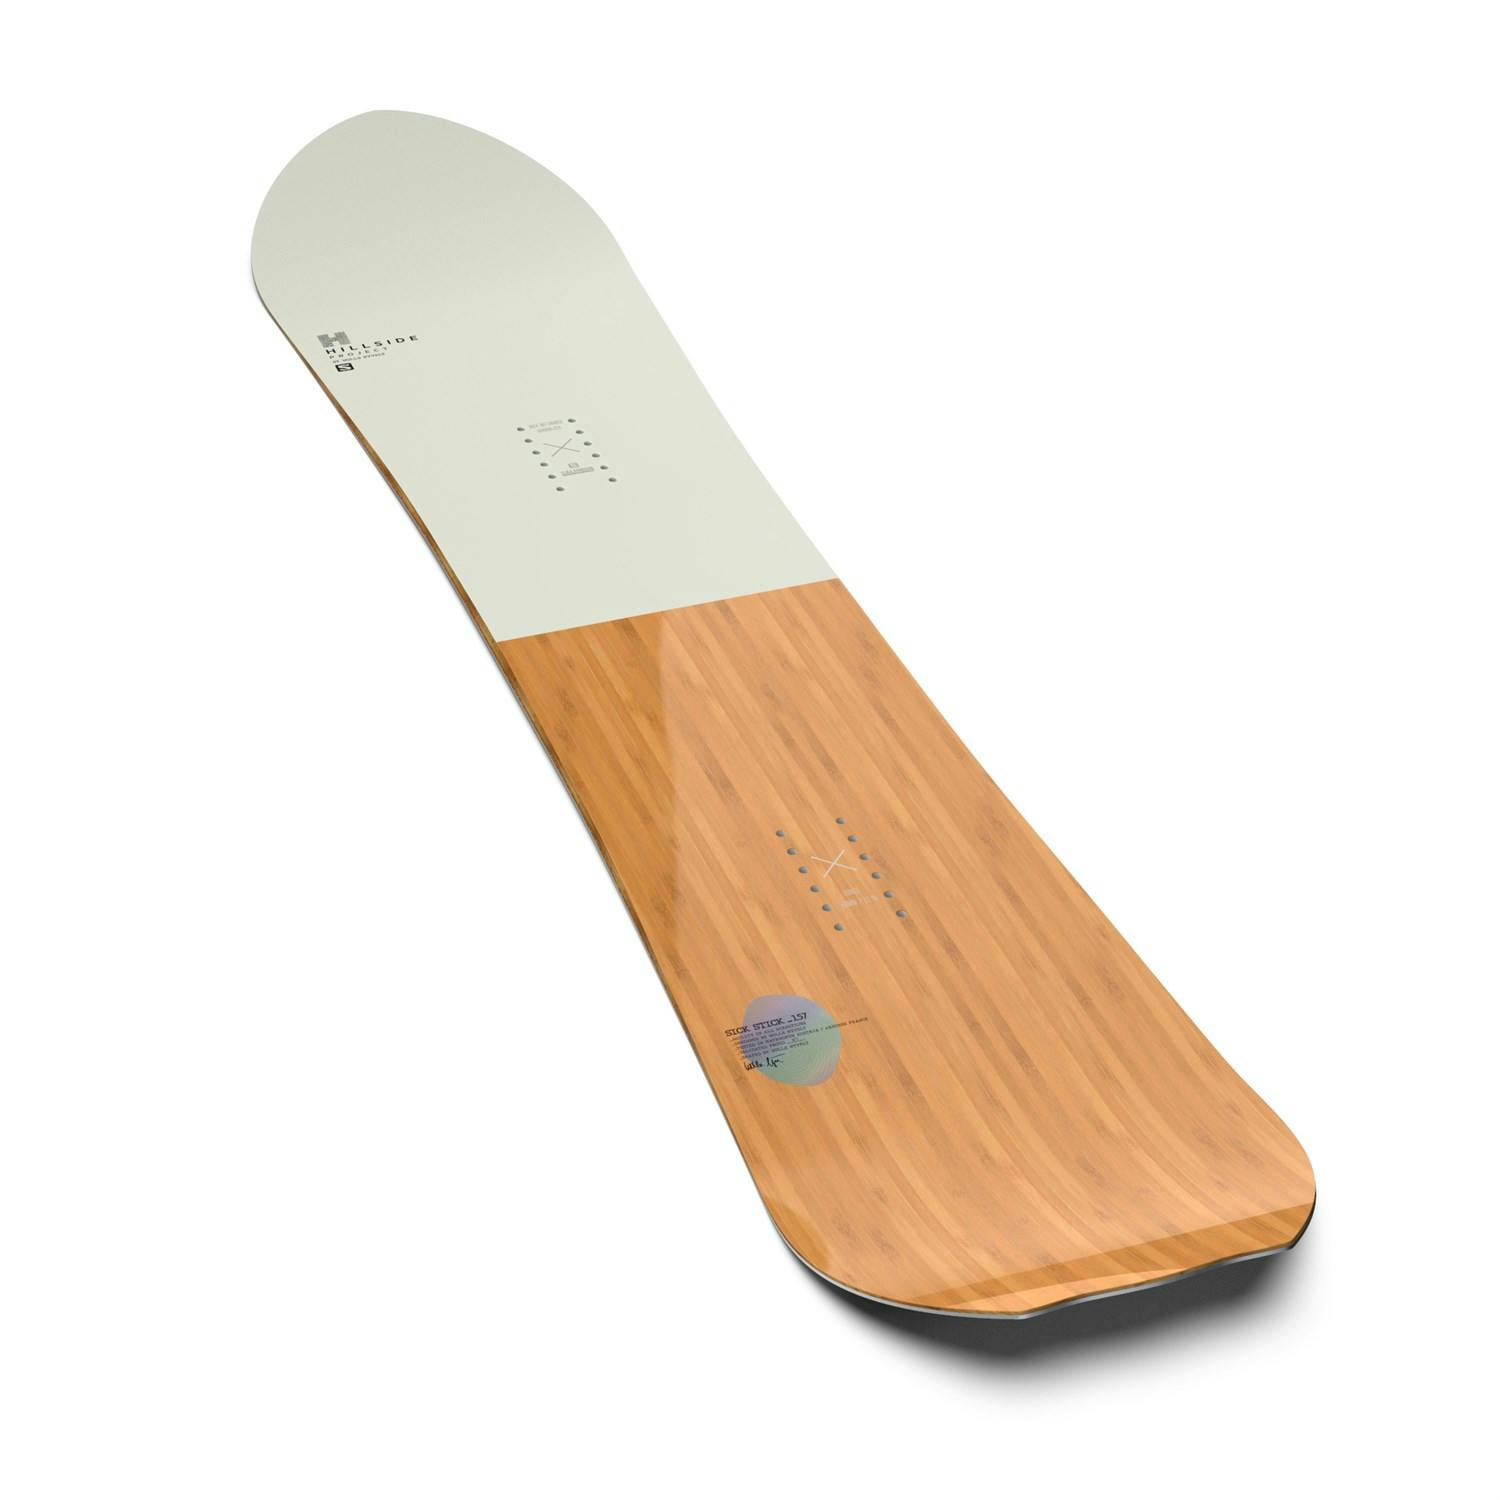 Salomon Sickstick Snowboard · 2024 · 157 cm